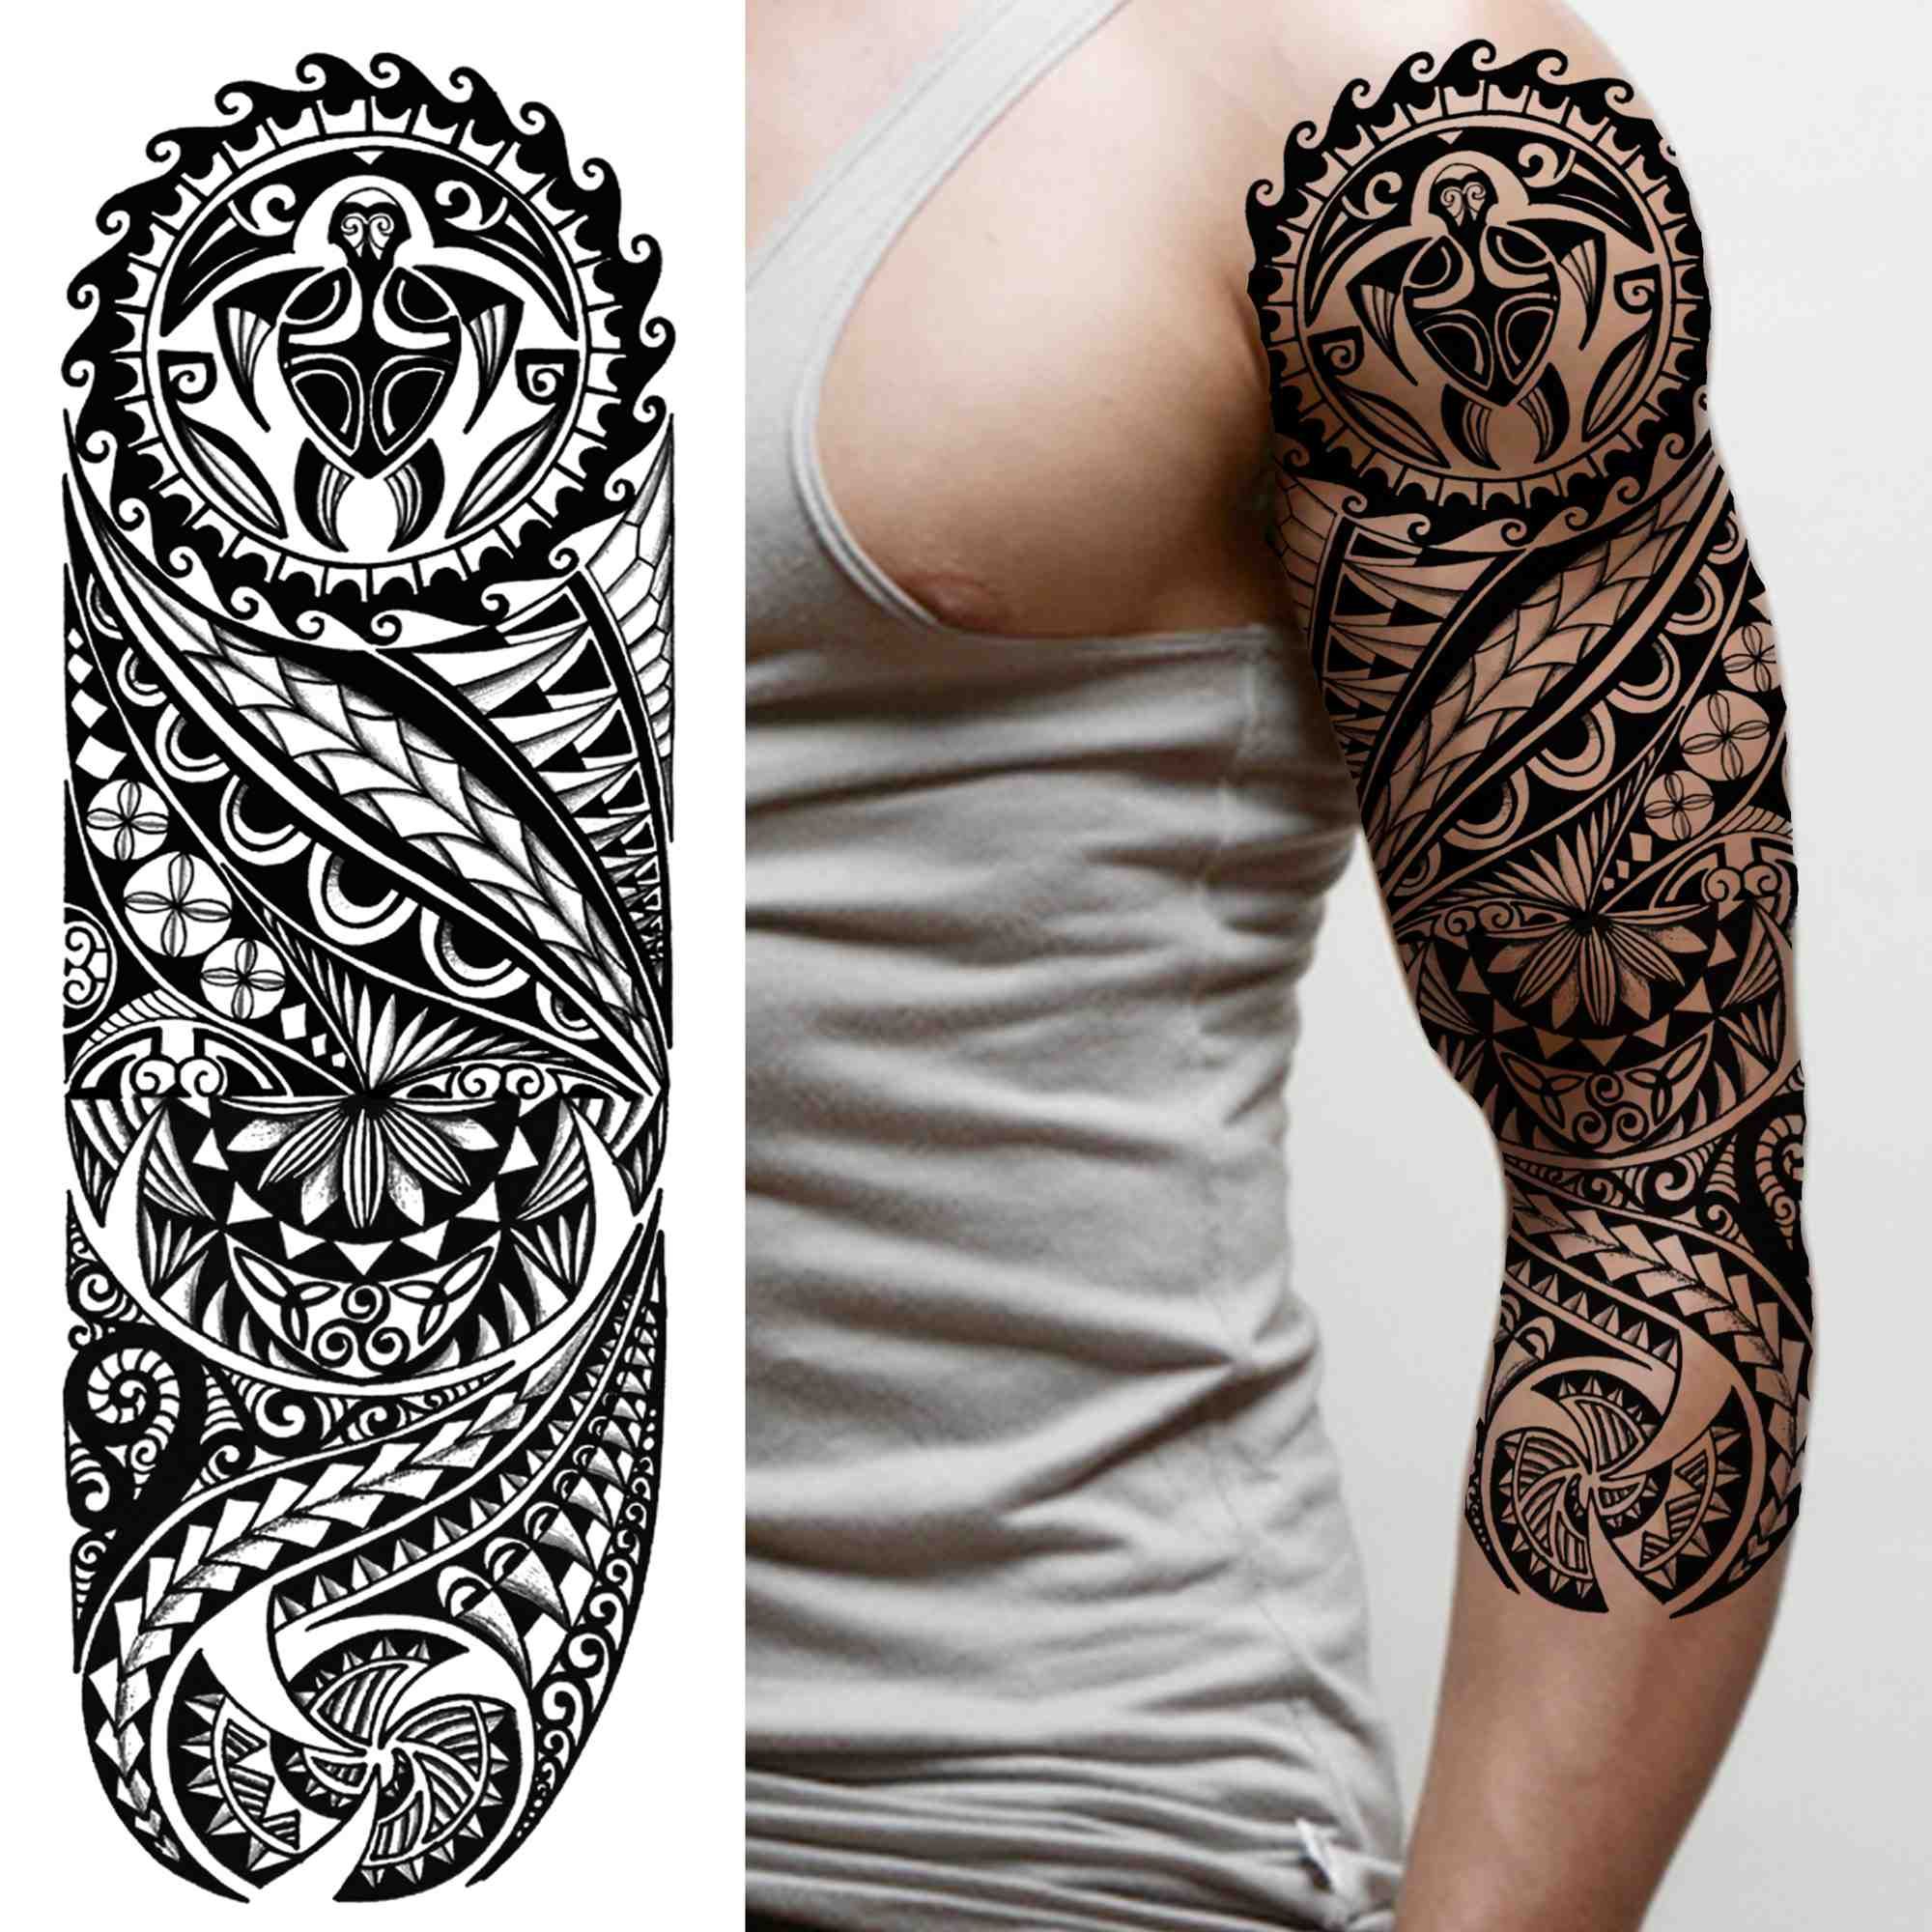 Tribal Maori Temporary Tattoo Sleeve For Men Women Adult Wolf Lion Tattoos  Sticker Black Large Turtle Tiki Fake Tatoos Supplies297n